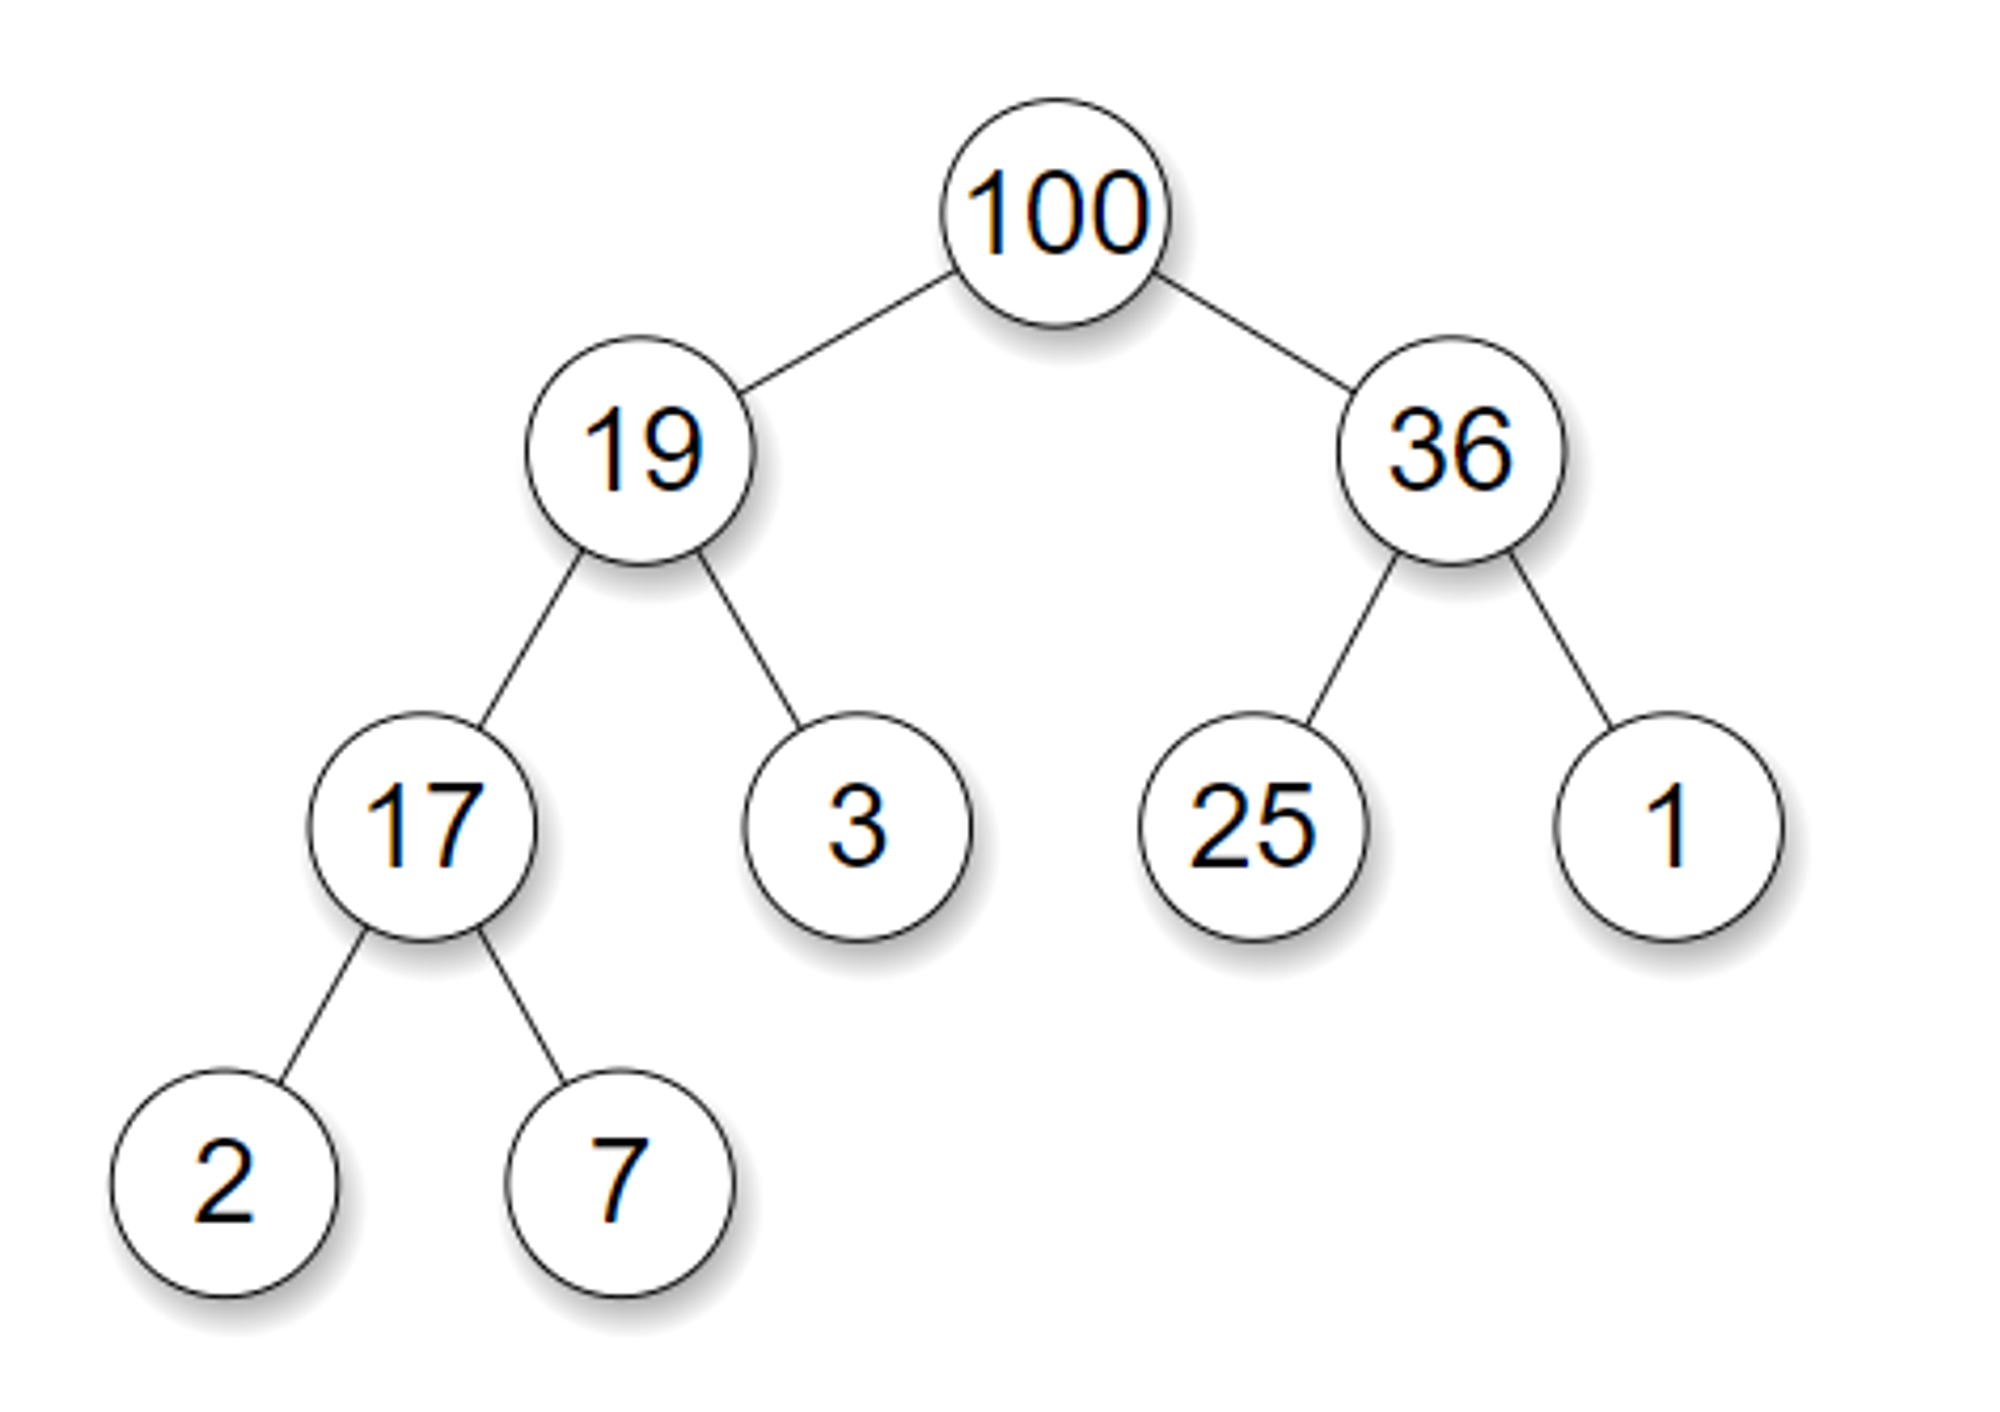 Data Structures and Algorithms Cheatsheet - 24